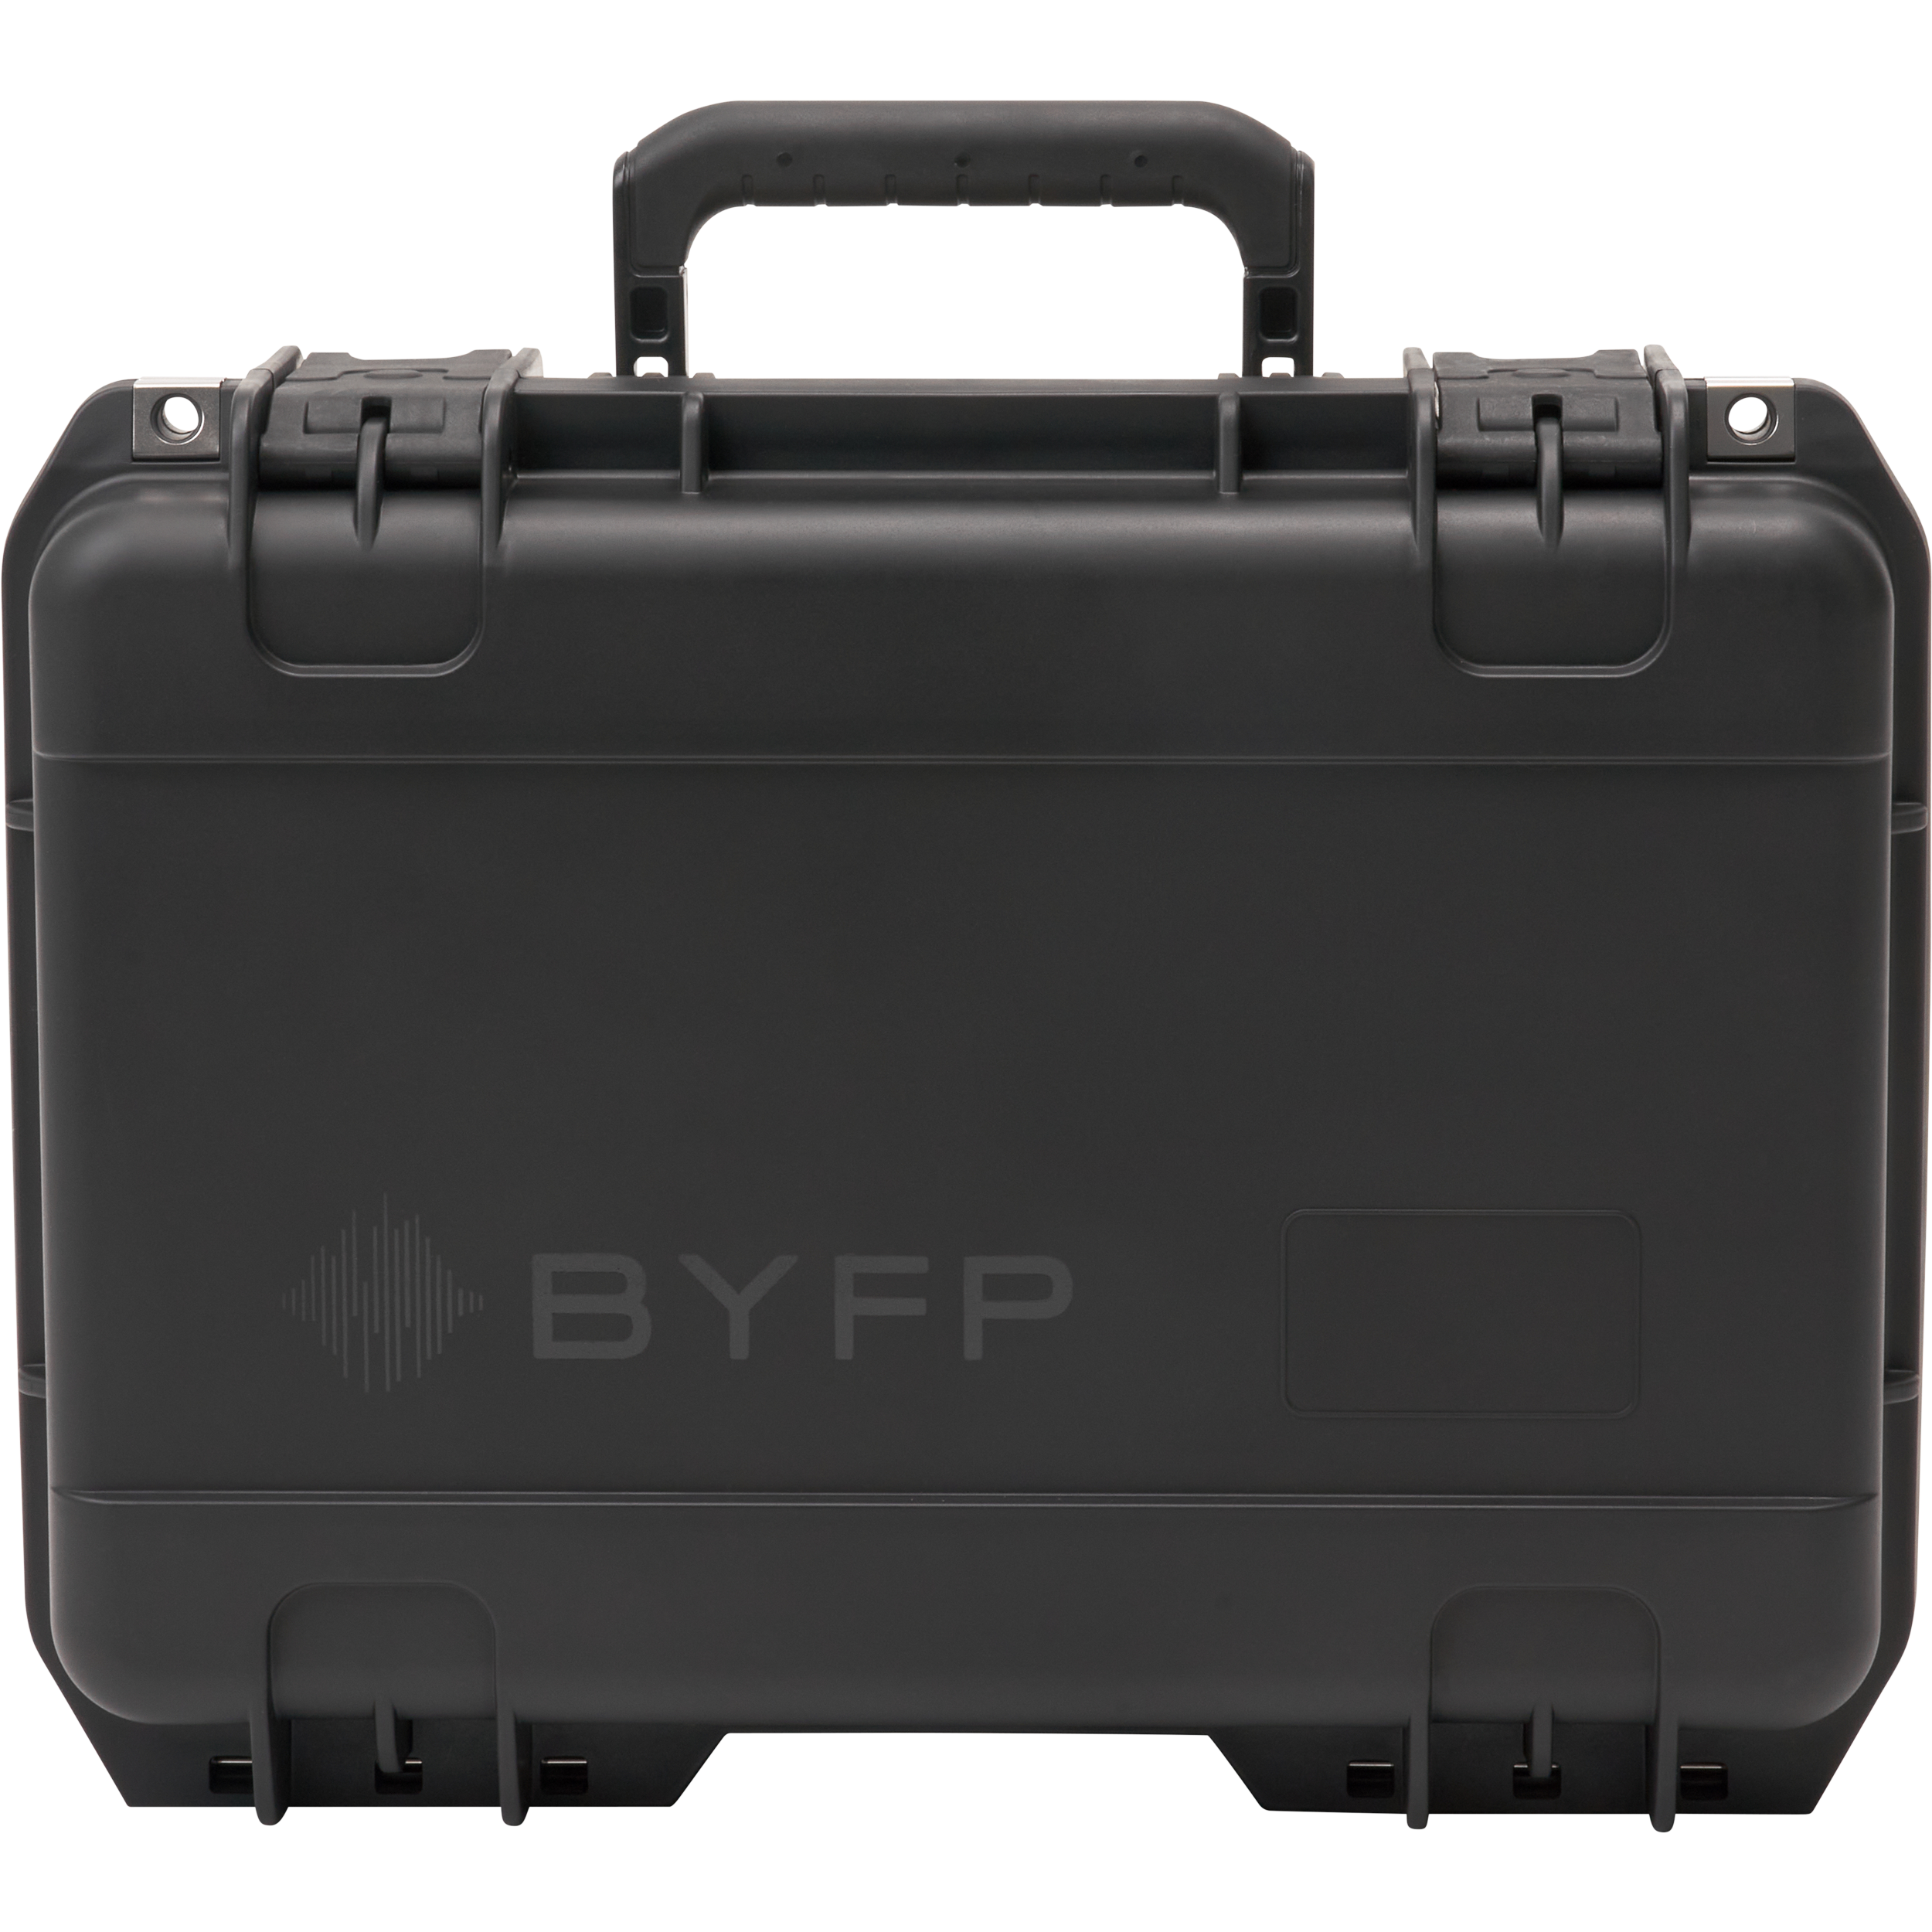 BYFP ipCase for 2x Roland V-02